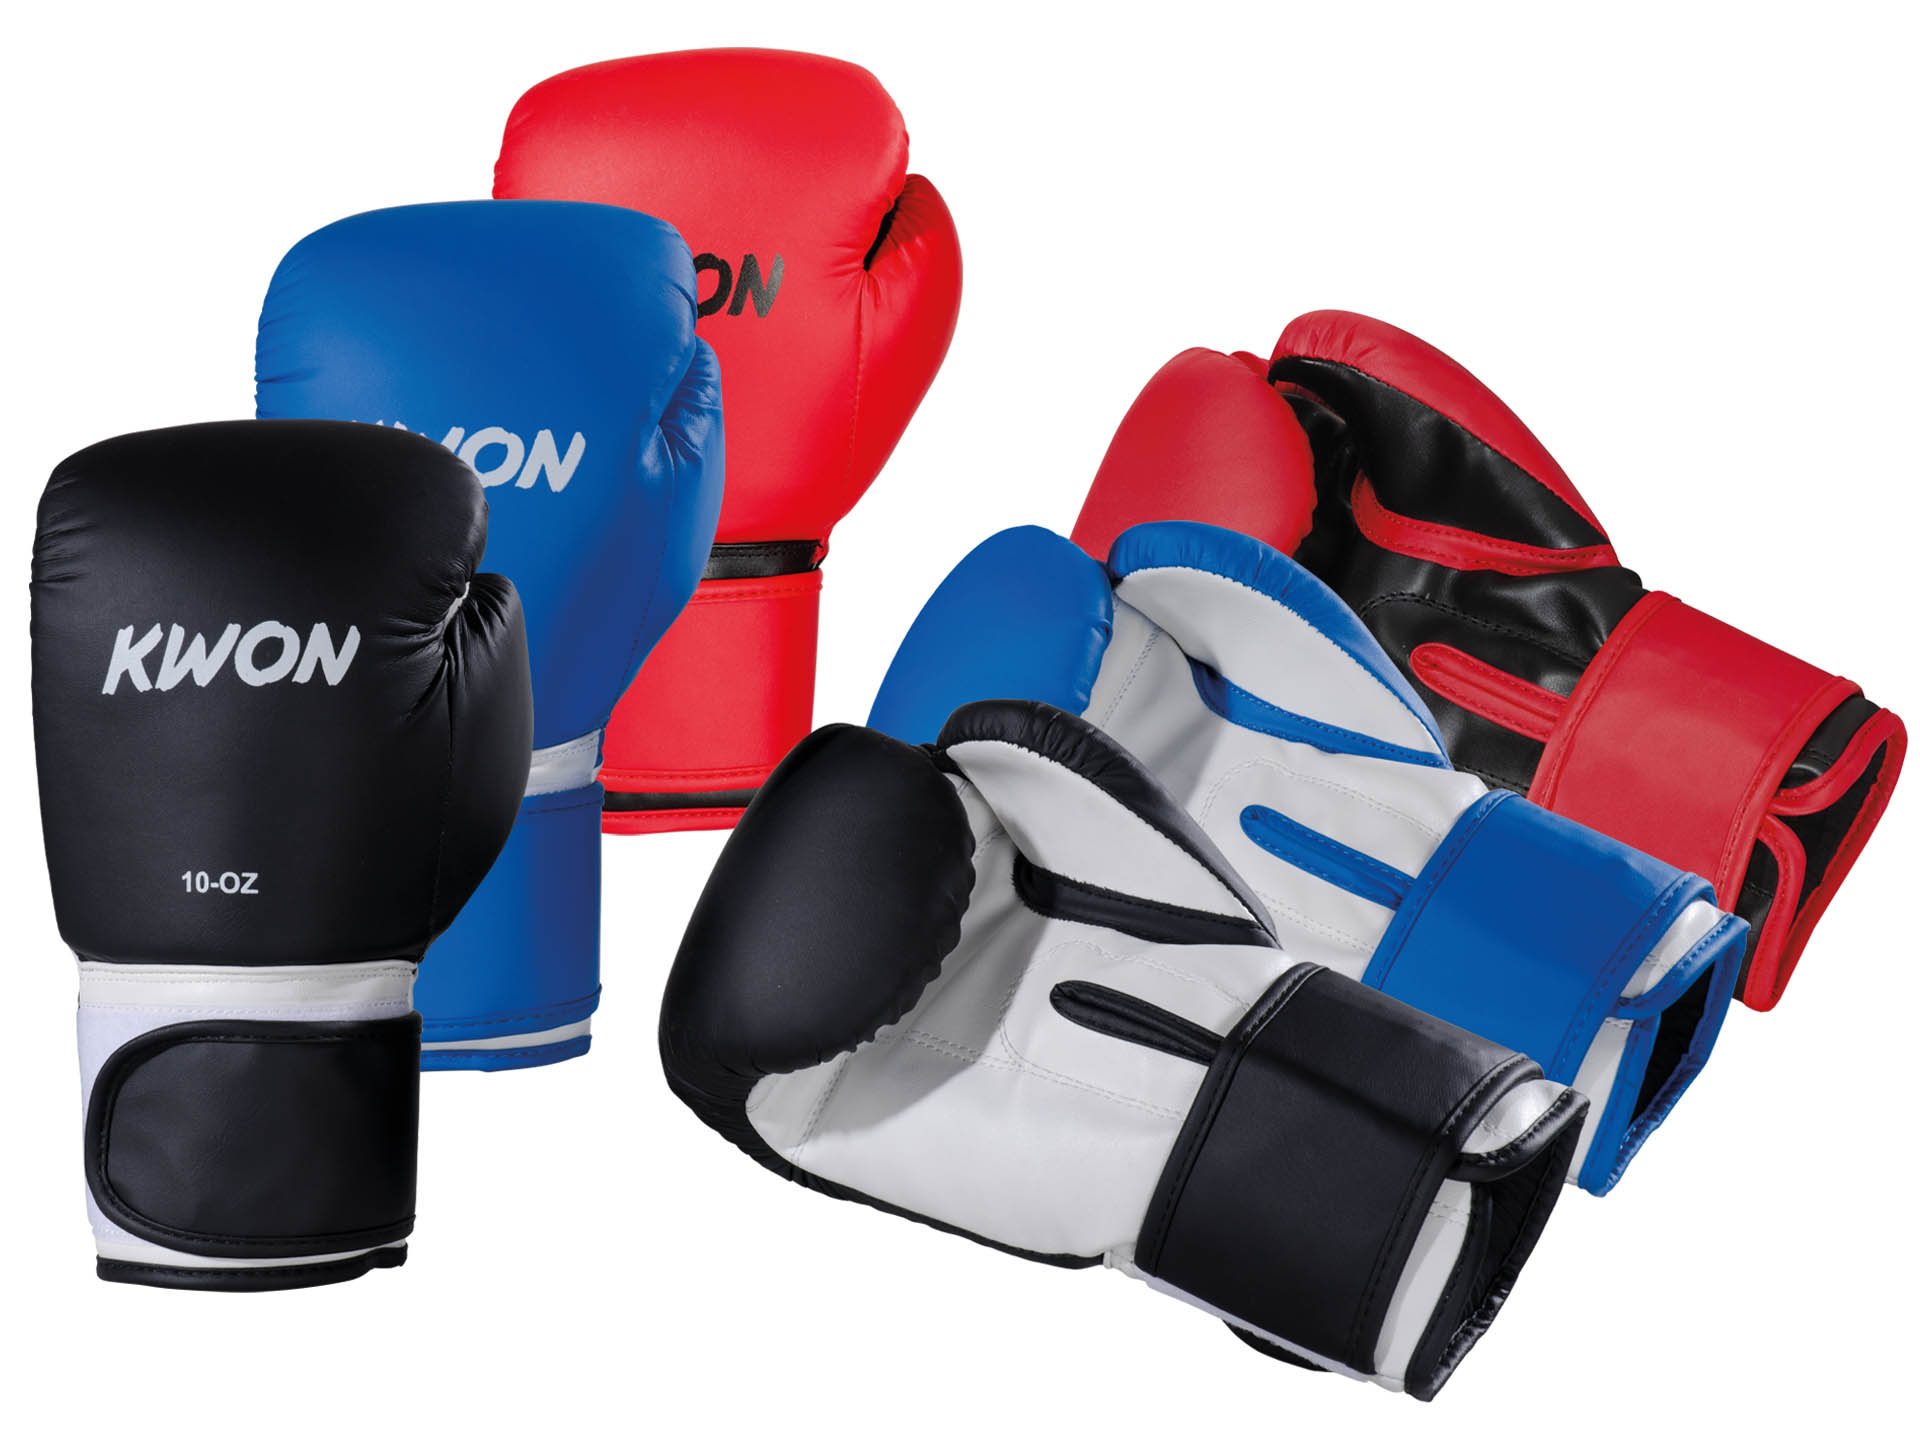 KWON Fitness Boxing Gloves - Weight: 8oz, 10oz, 12oz, 14oz, 16oz